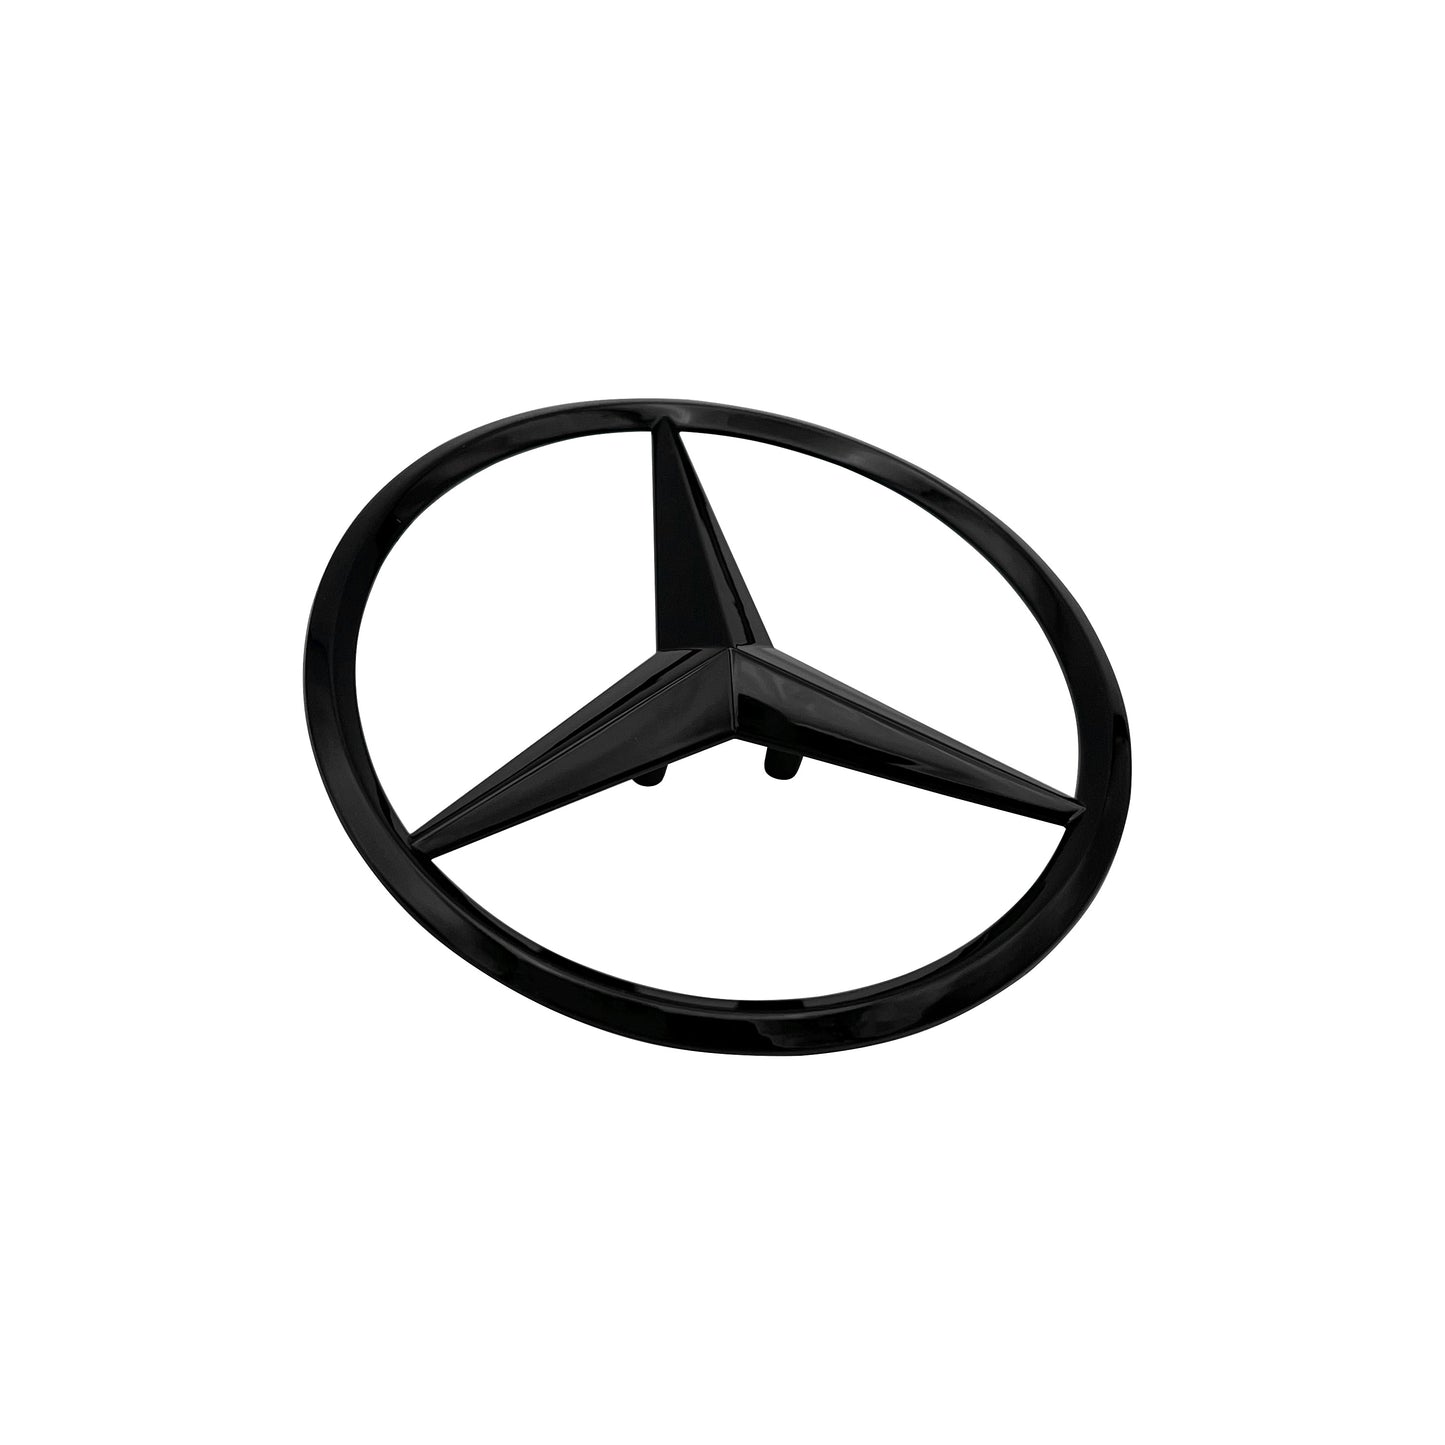 Mercedes Benz W205 Gloss Black Star C Class Trunk Emblem for Rear Lid Logo Badge AMG